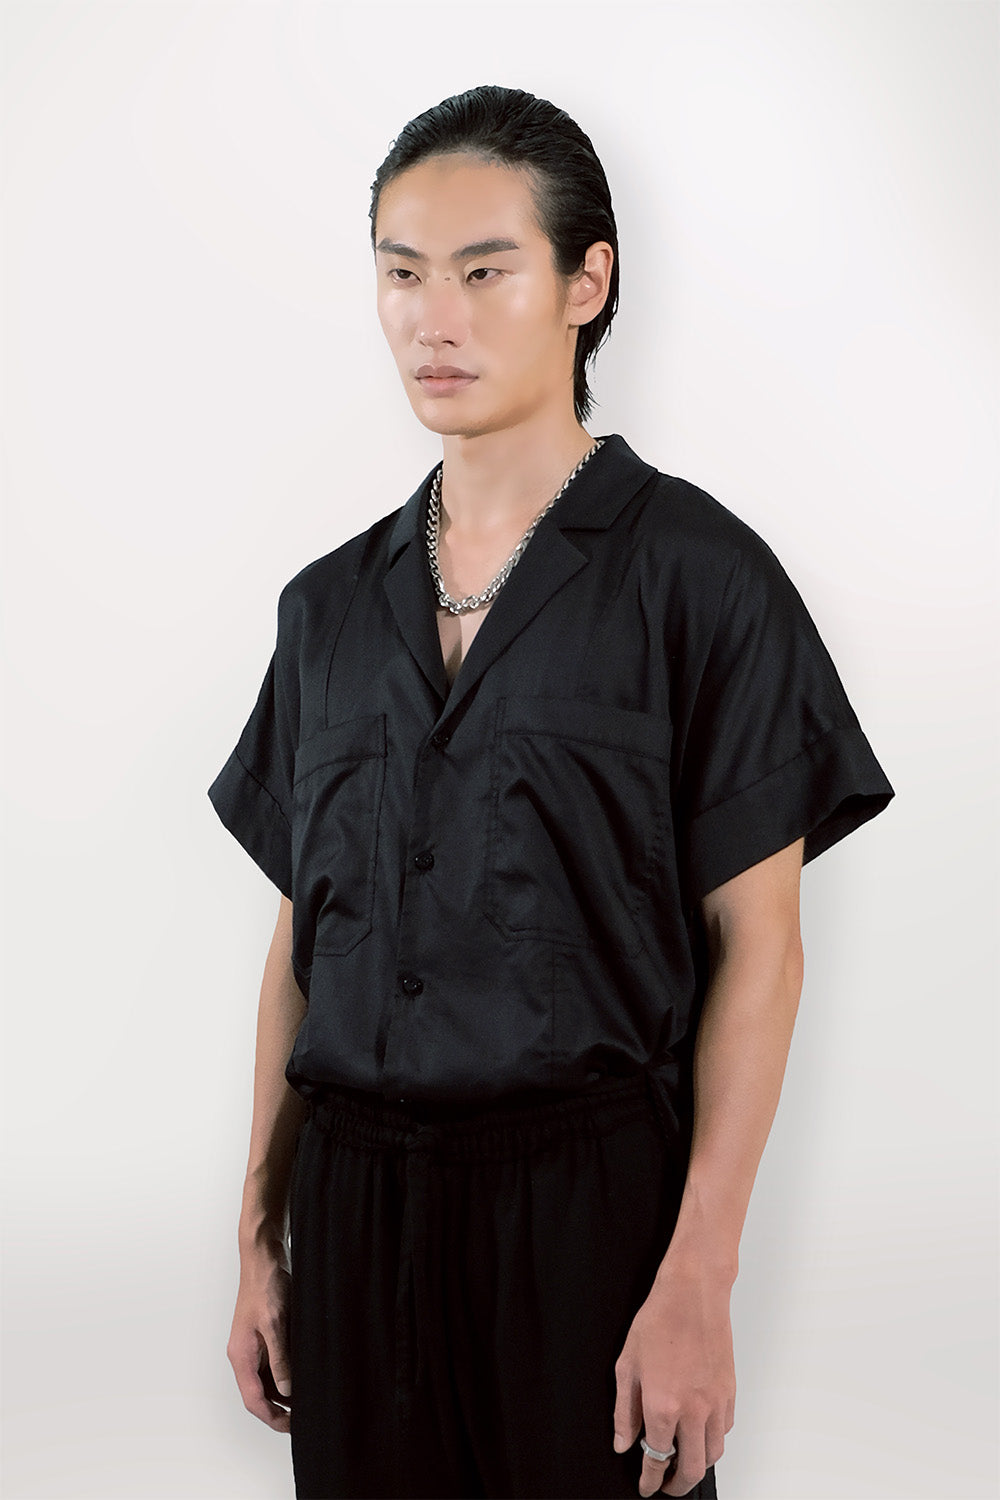 SEANNUNG - MEN - Round Saddle Shoulder Shirt 圓形連袖襯衫